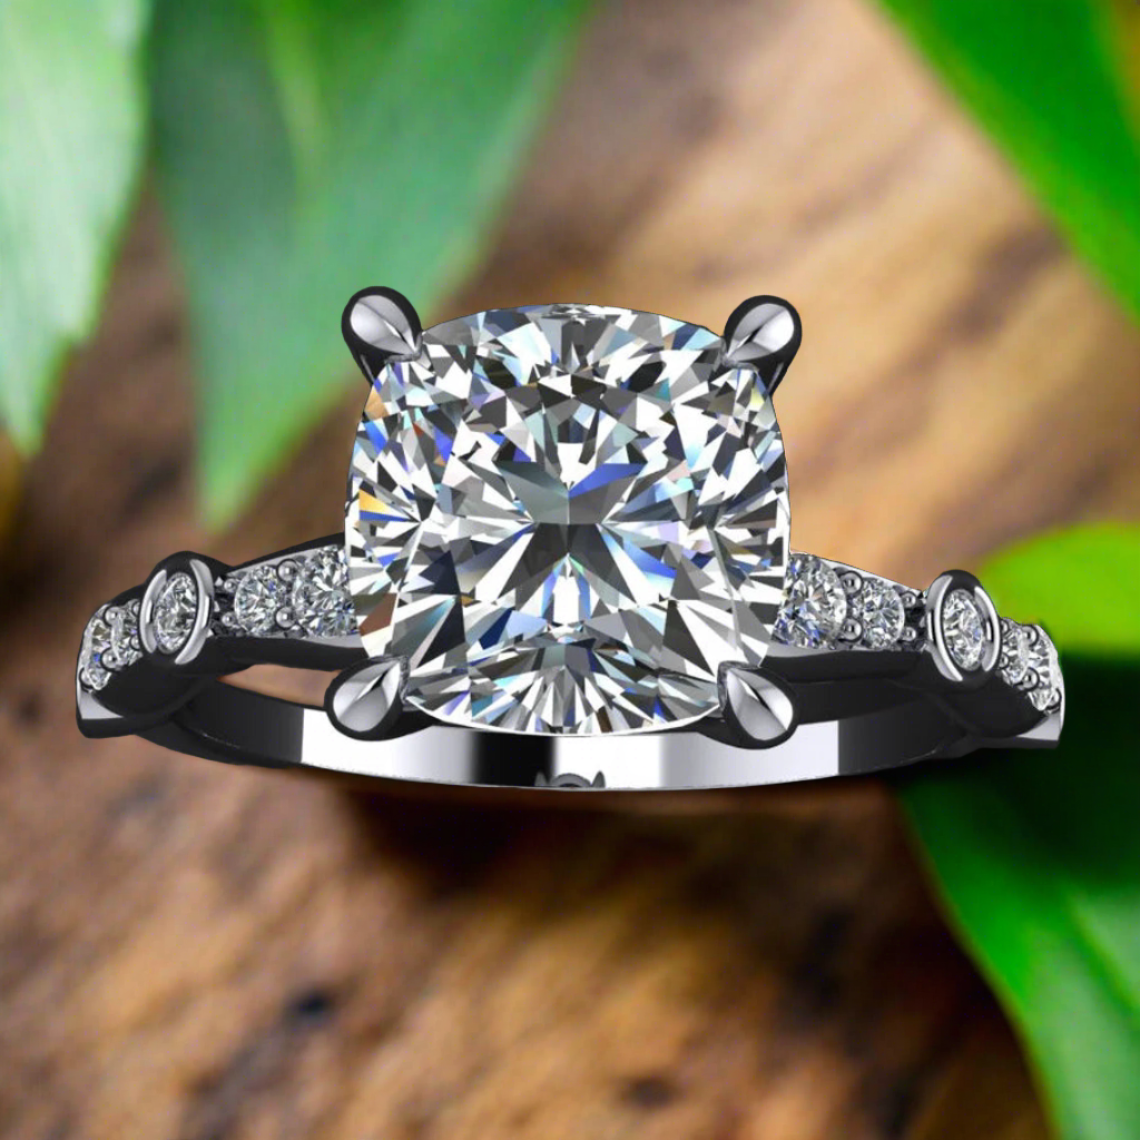 amelia ring - 2 carat cushion cut NEO moissanite engagement ring, colorless moissanite - J Hollywood Designs